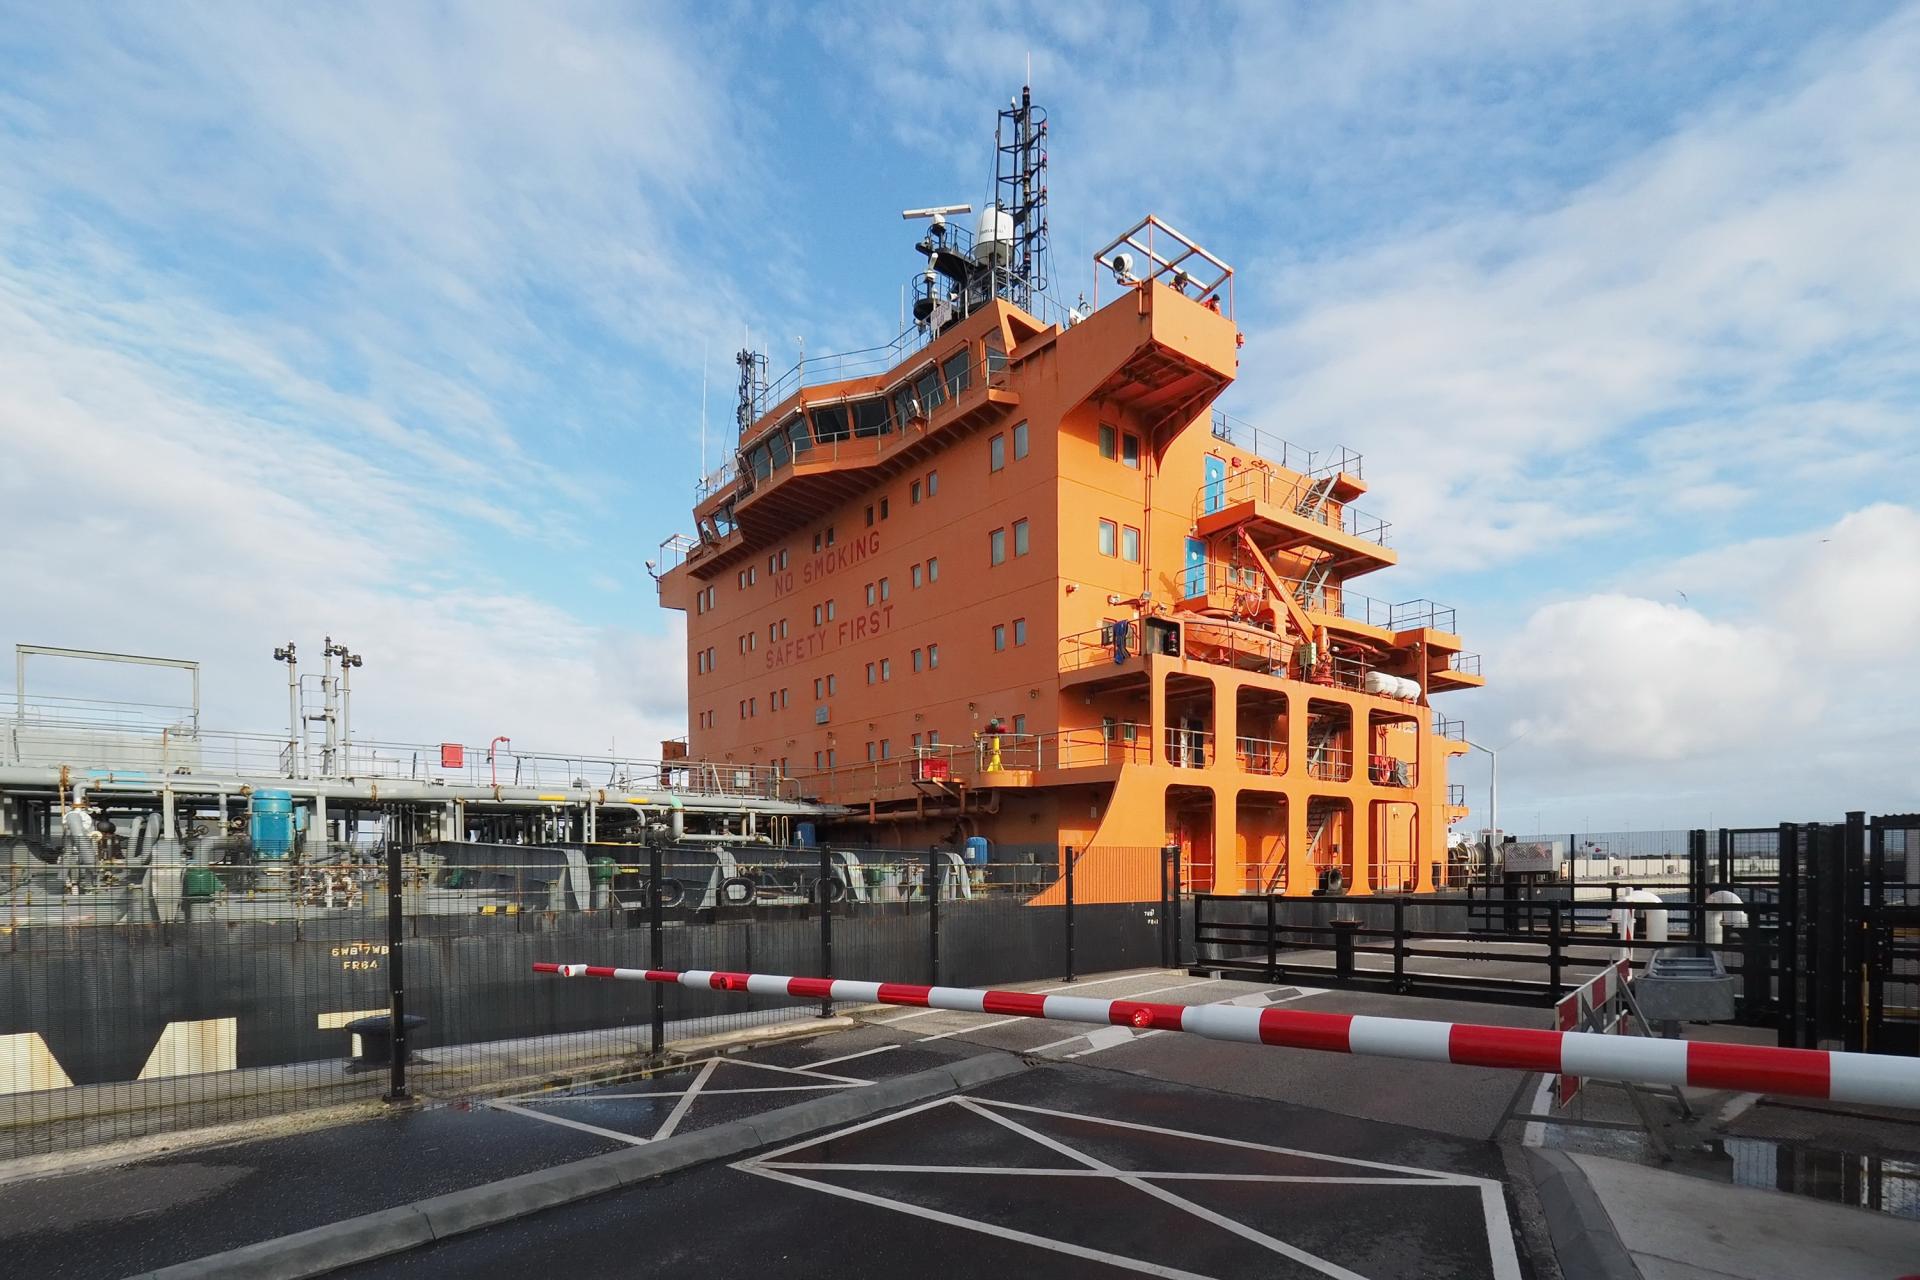 London Photography Awards Winner - New and biggest sea lock Zeesluis IJmuiden in use